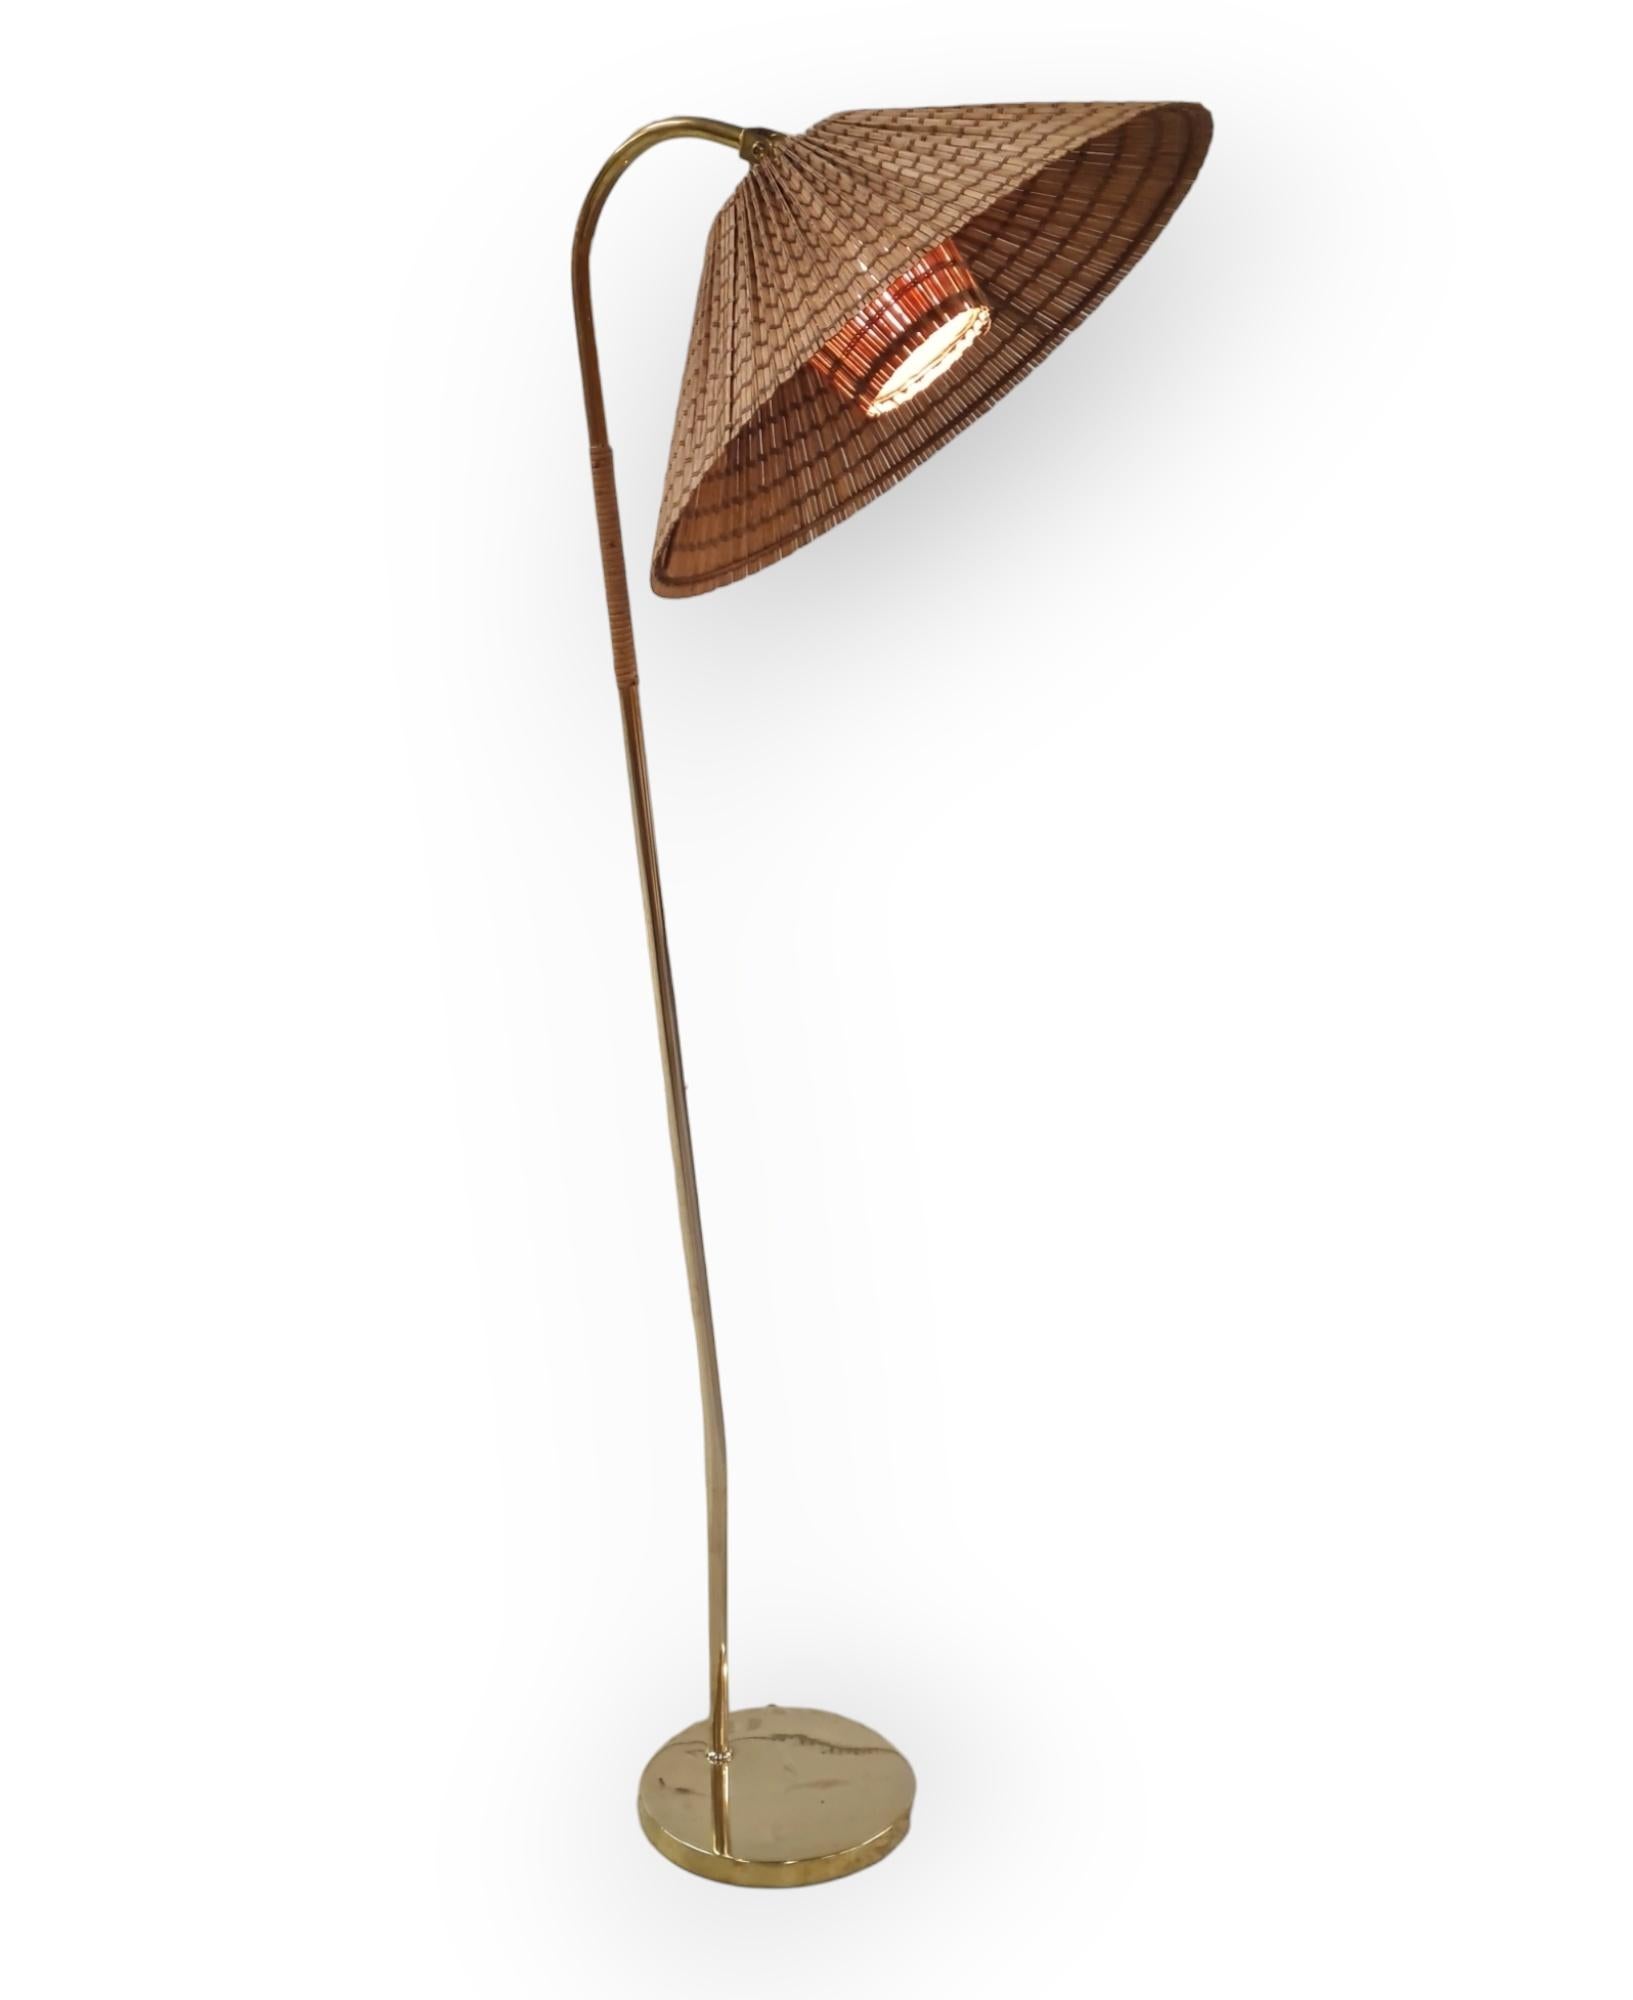 Rare Gunnel Nyman Floor Lamp Model No. 62043 by Idman, 1940 For Sale 6